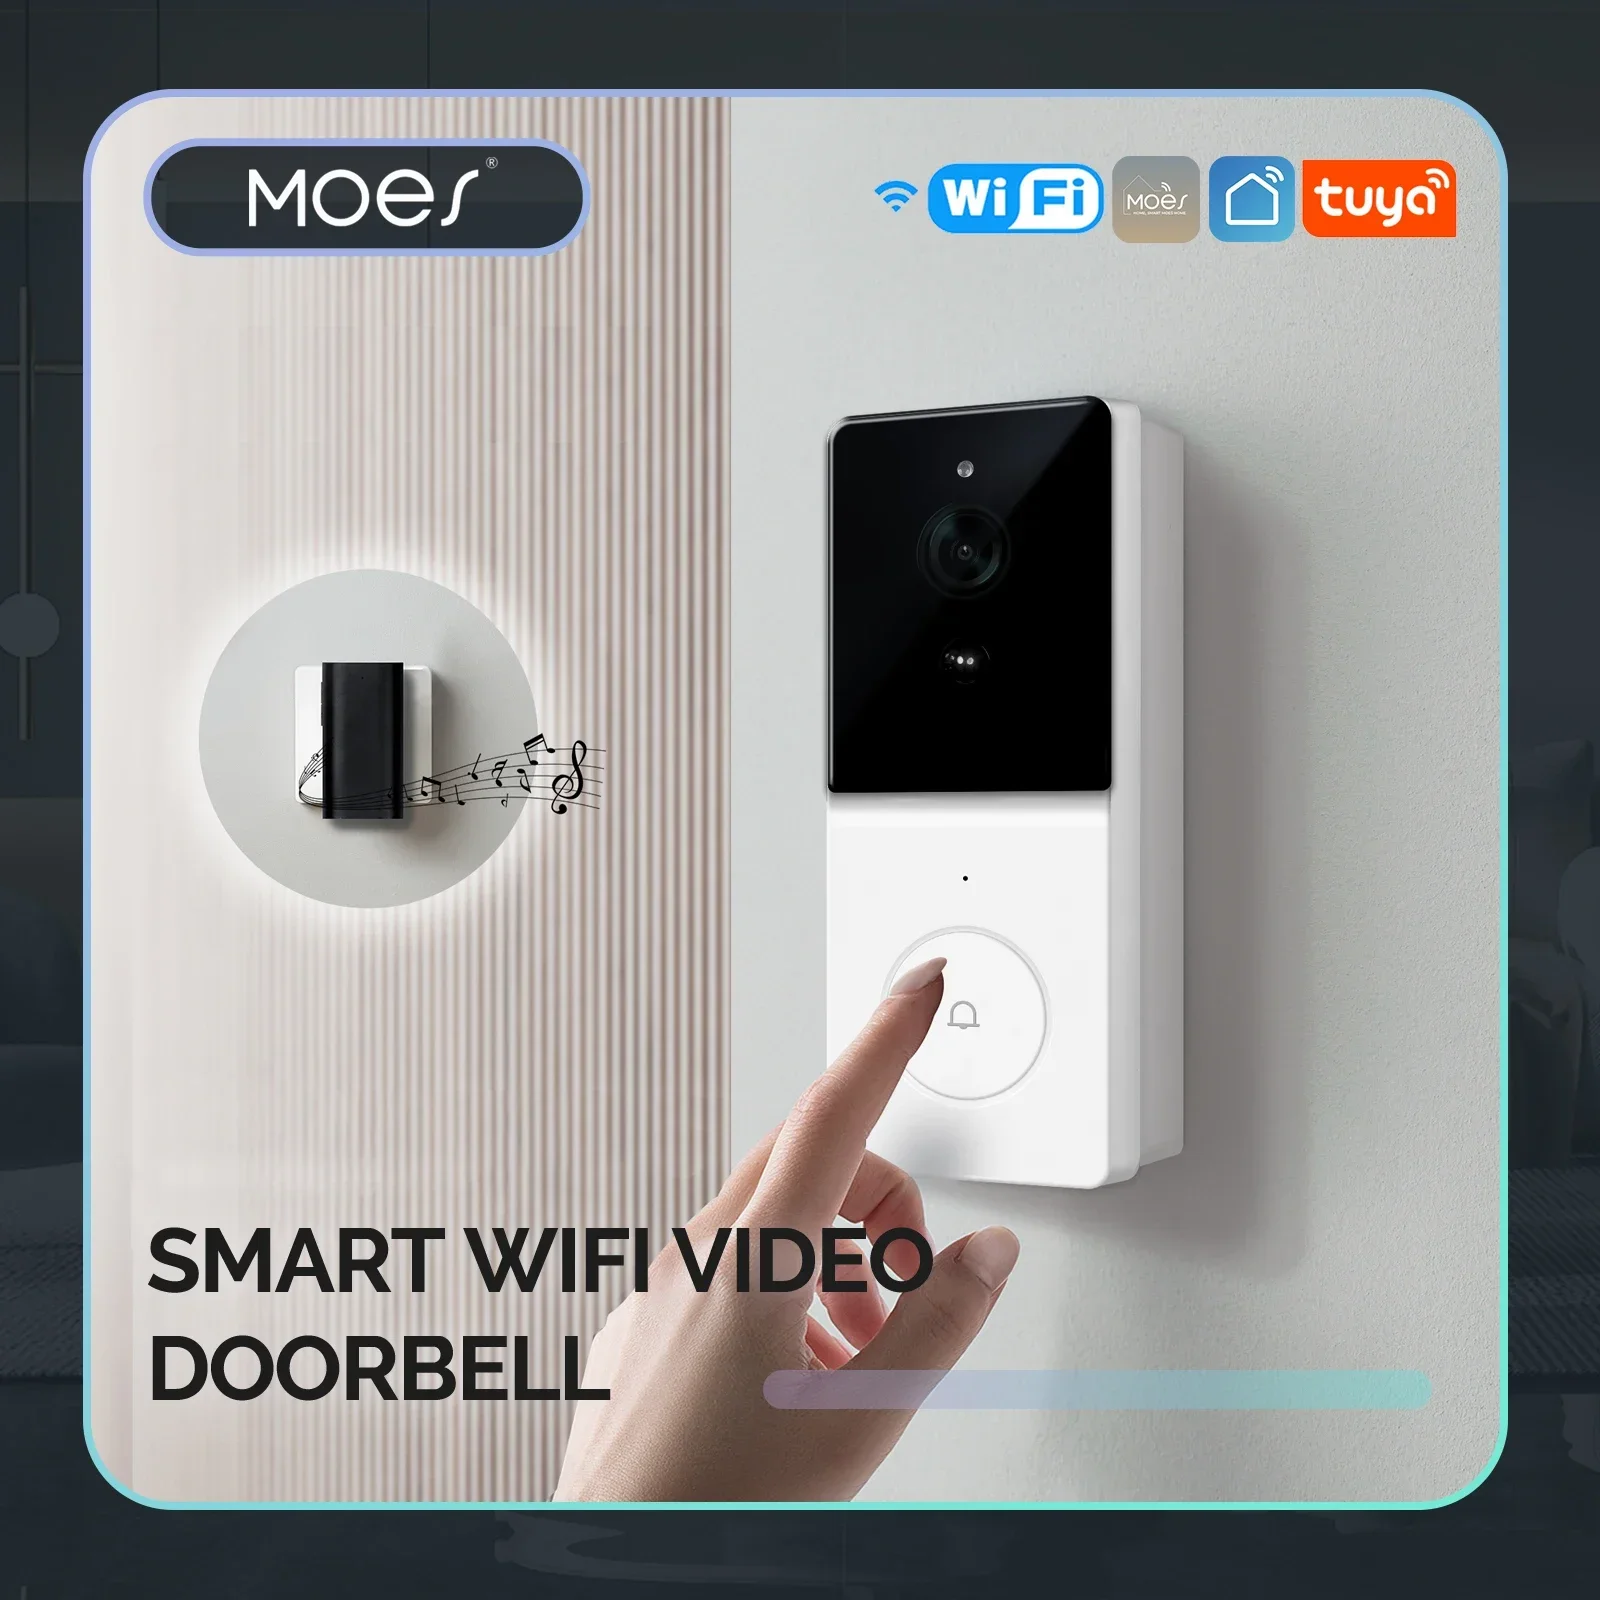 MOES Tuya Smart WiFi Video Doorbell Camera with 2-Way Audio Intercom, Night Vision & Wireless Door product Home Security